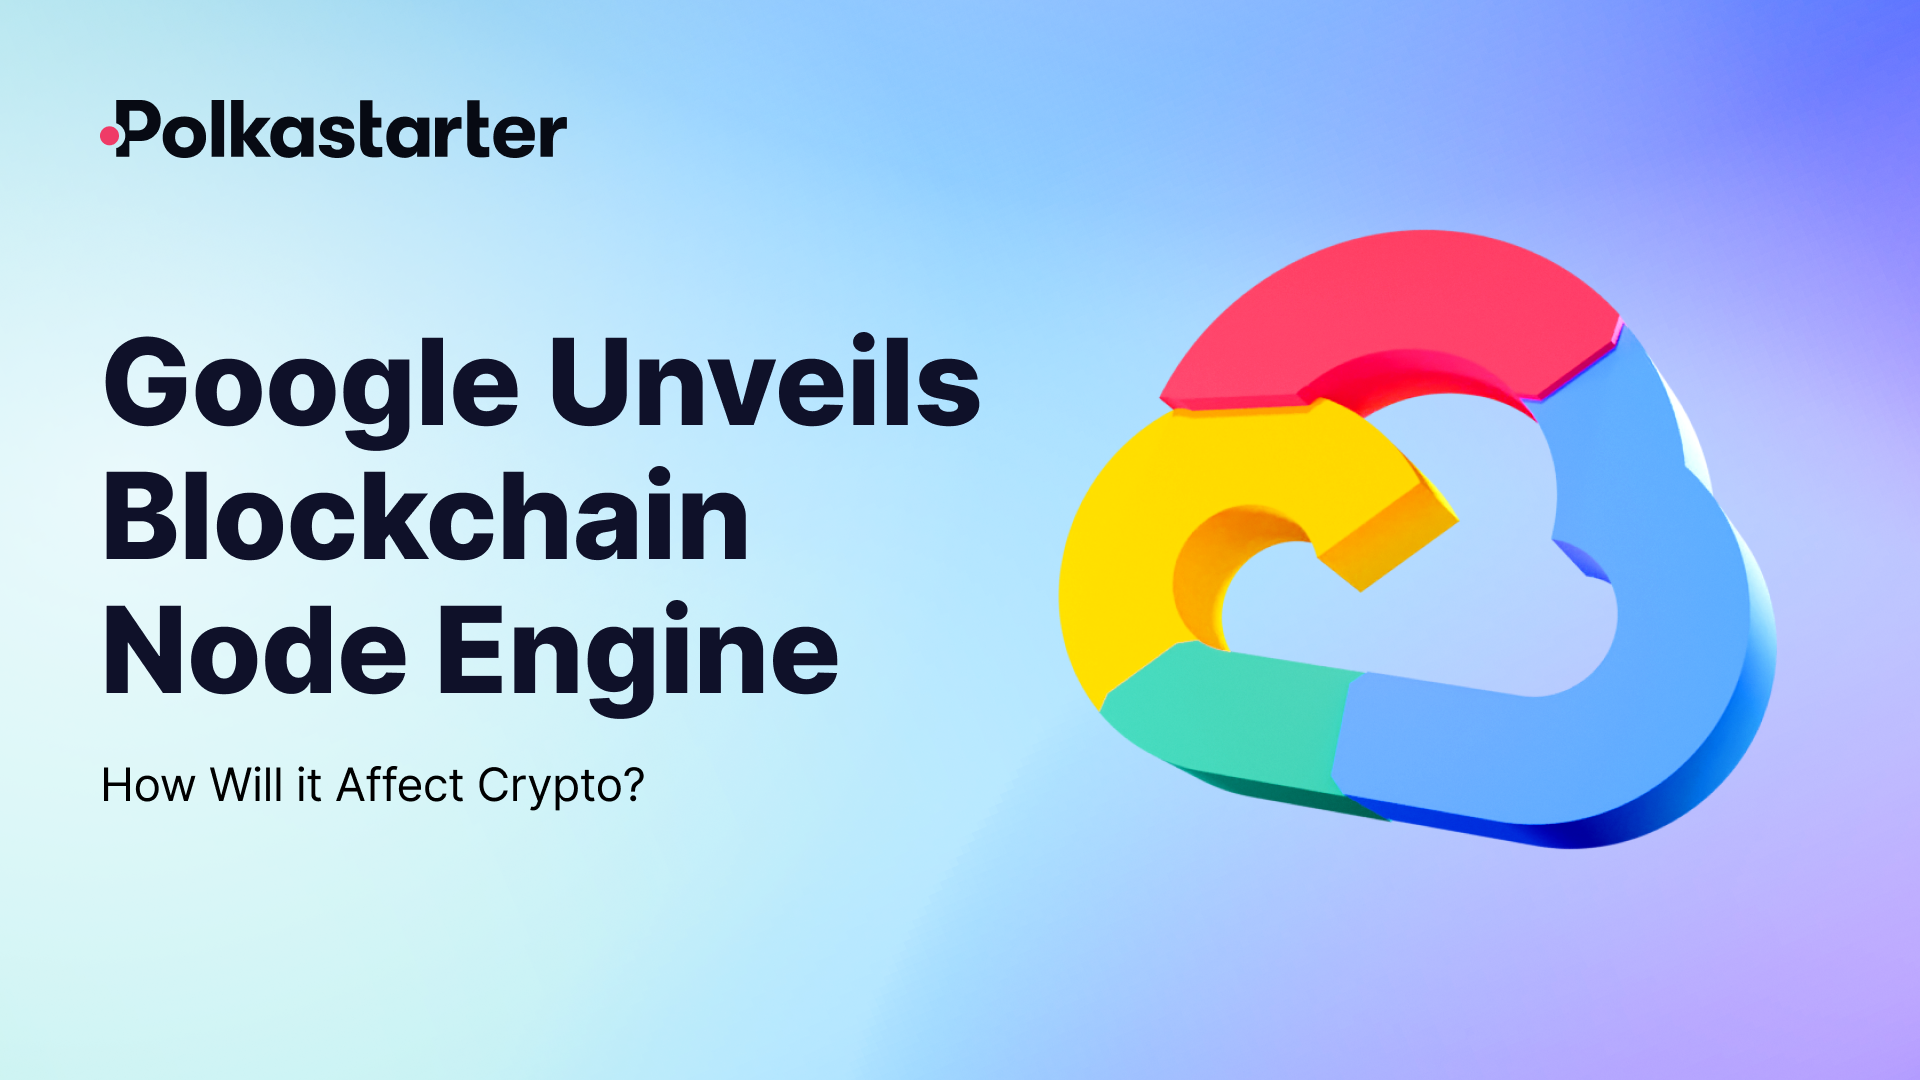 Google Unveils Blockchain Node Engine: How Will it Affect Crypto?